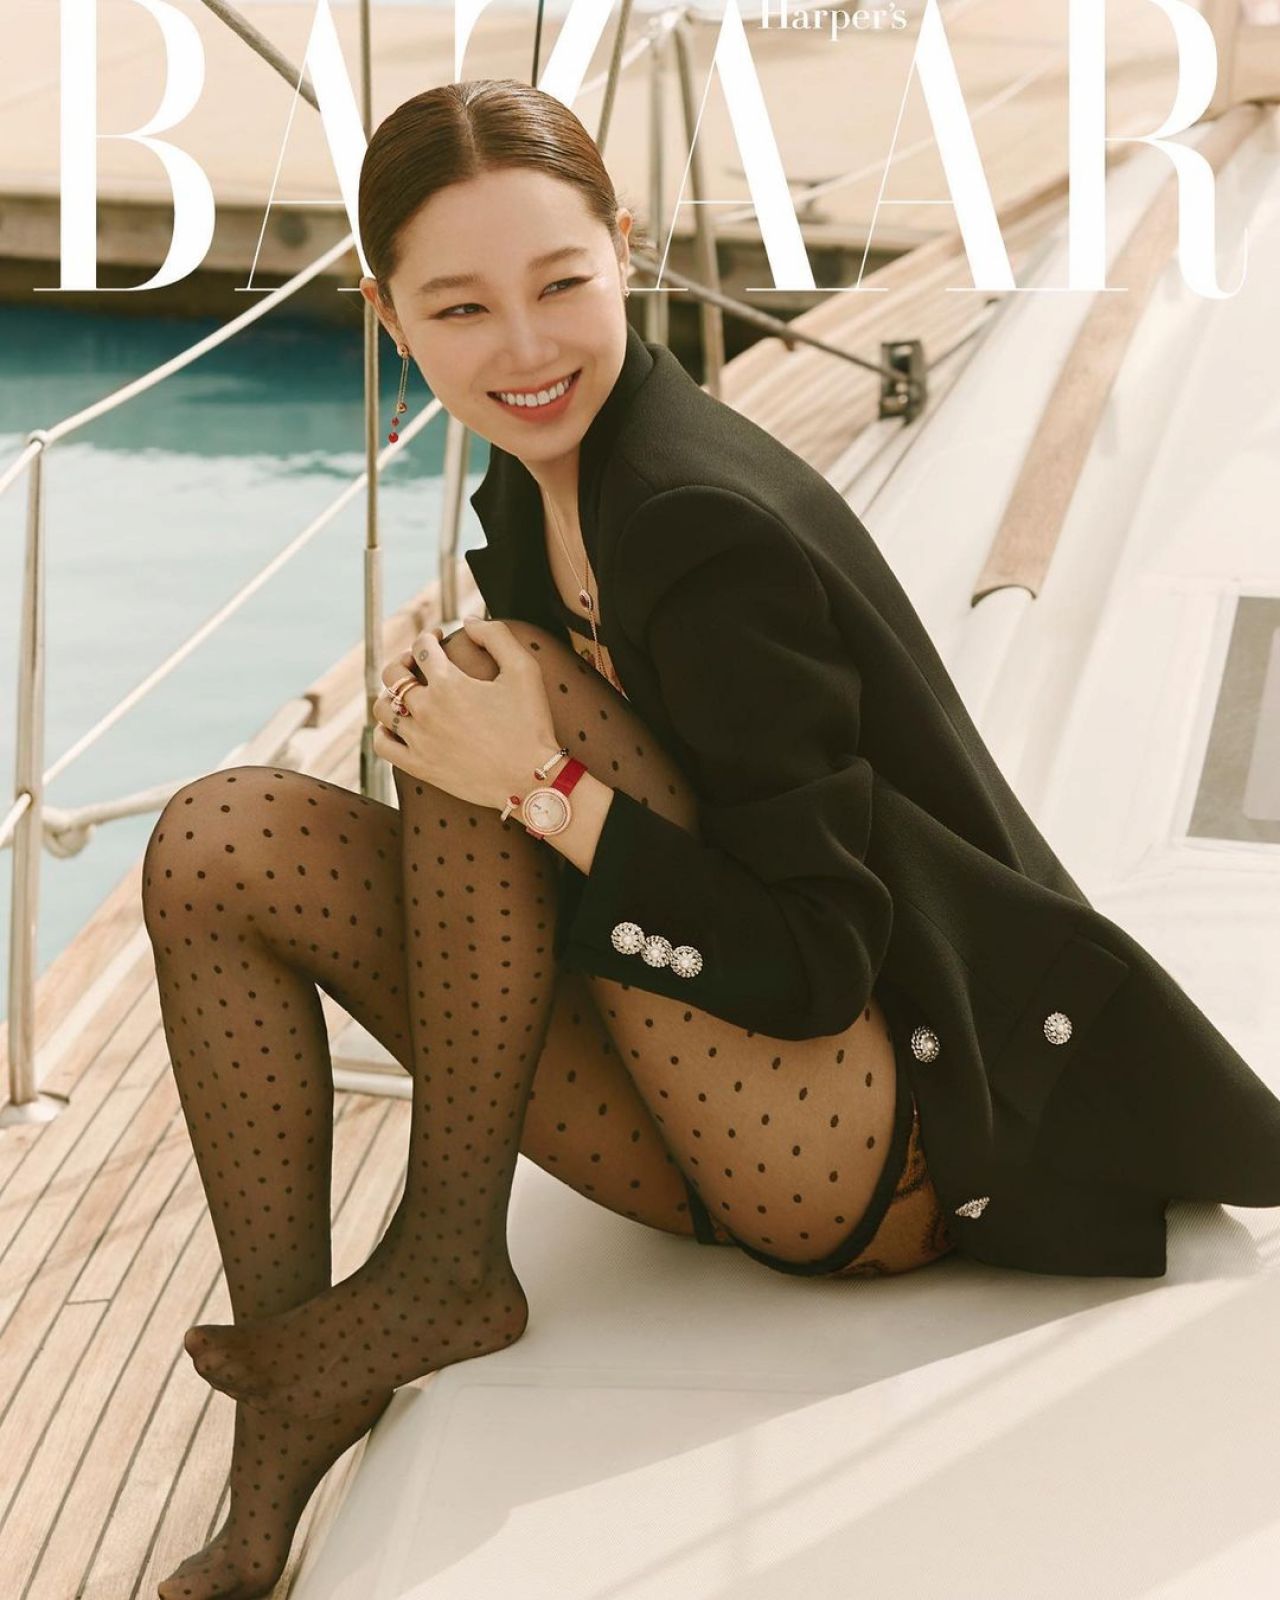 Gong Hyo Jin - Photographed for Harper’s Bazaar Magazine Korea June 2021.